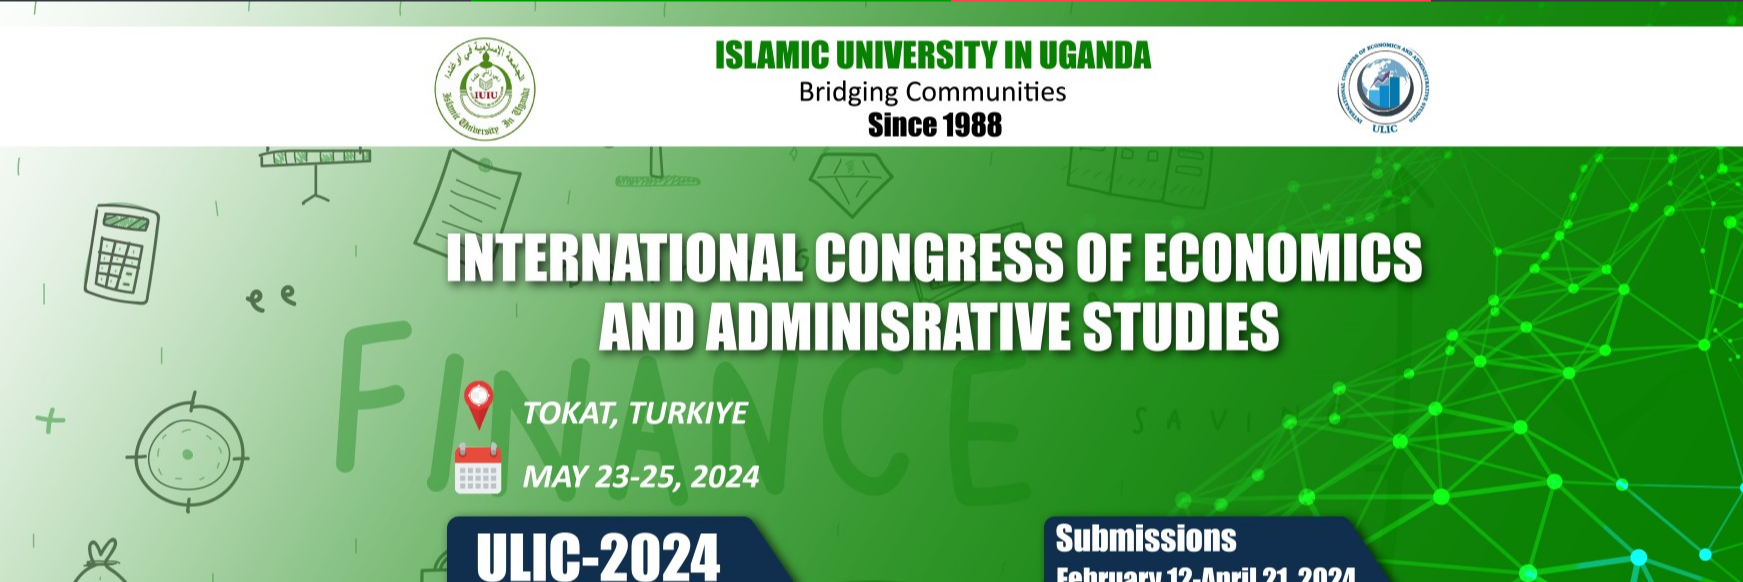 Islamic University in Uganda (IUIU)